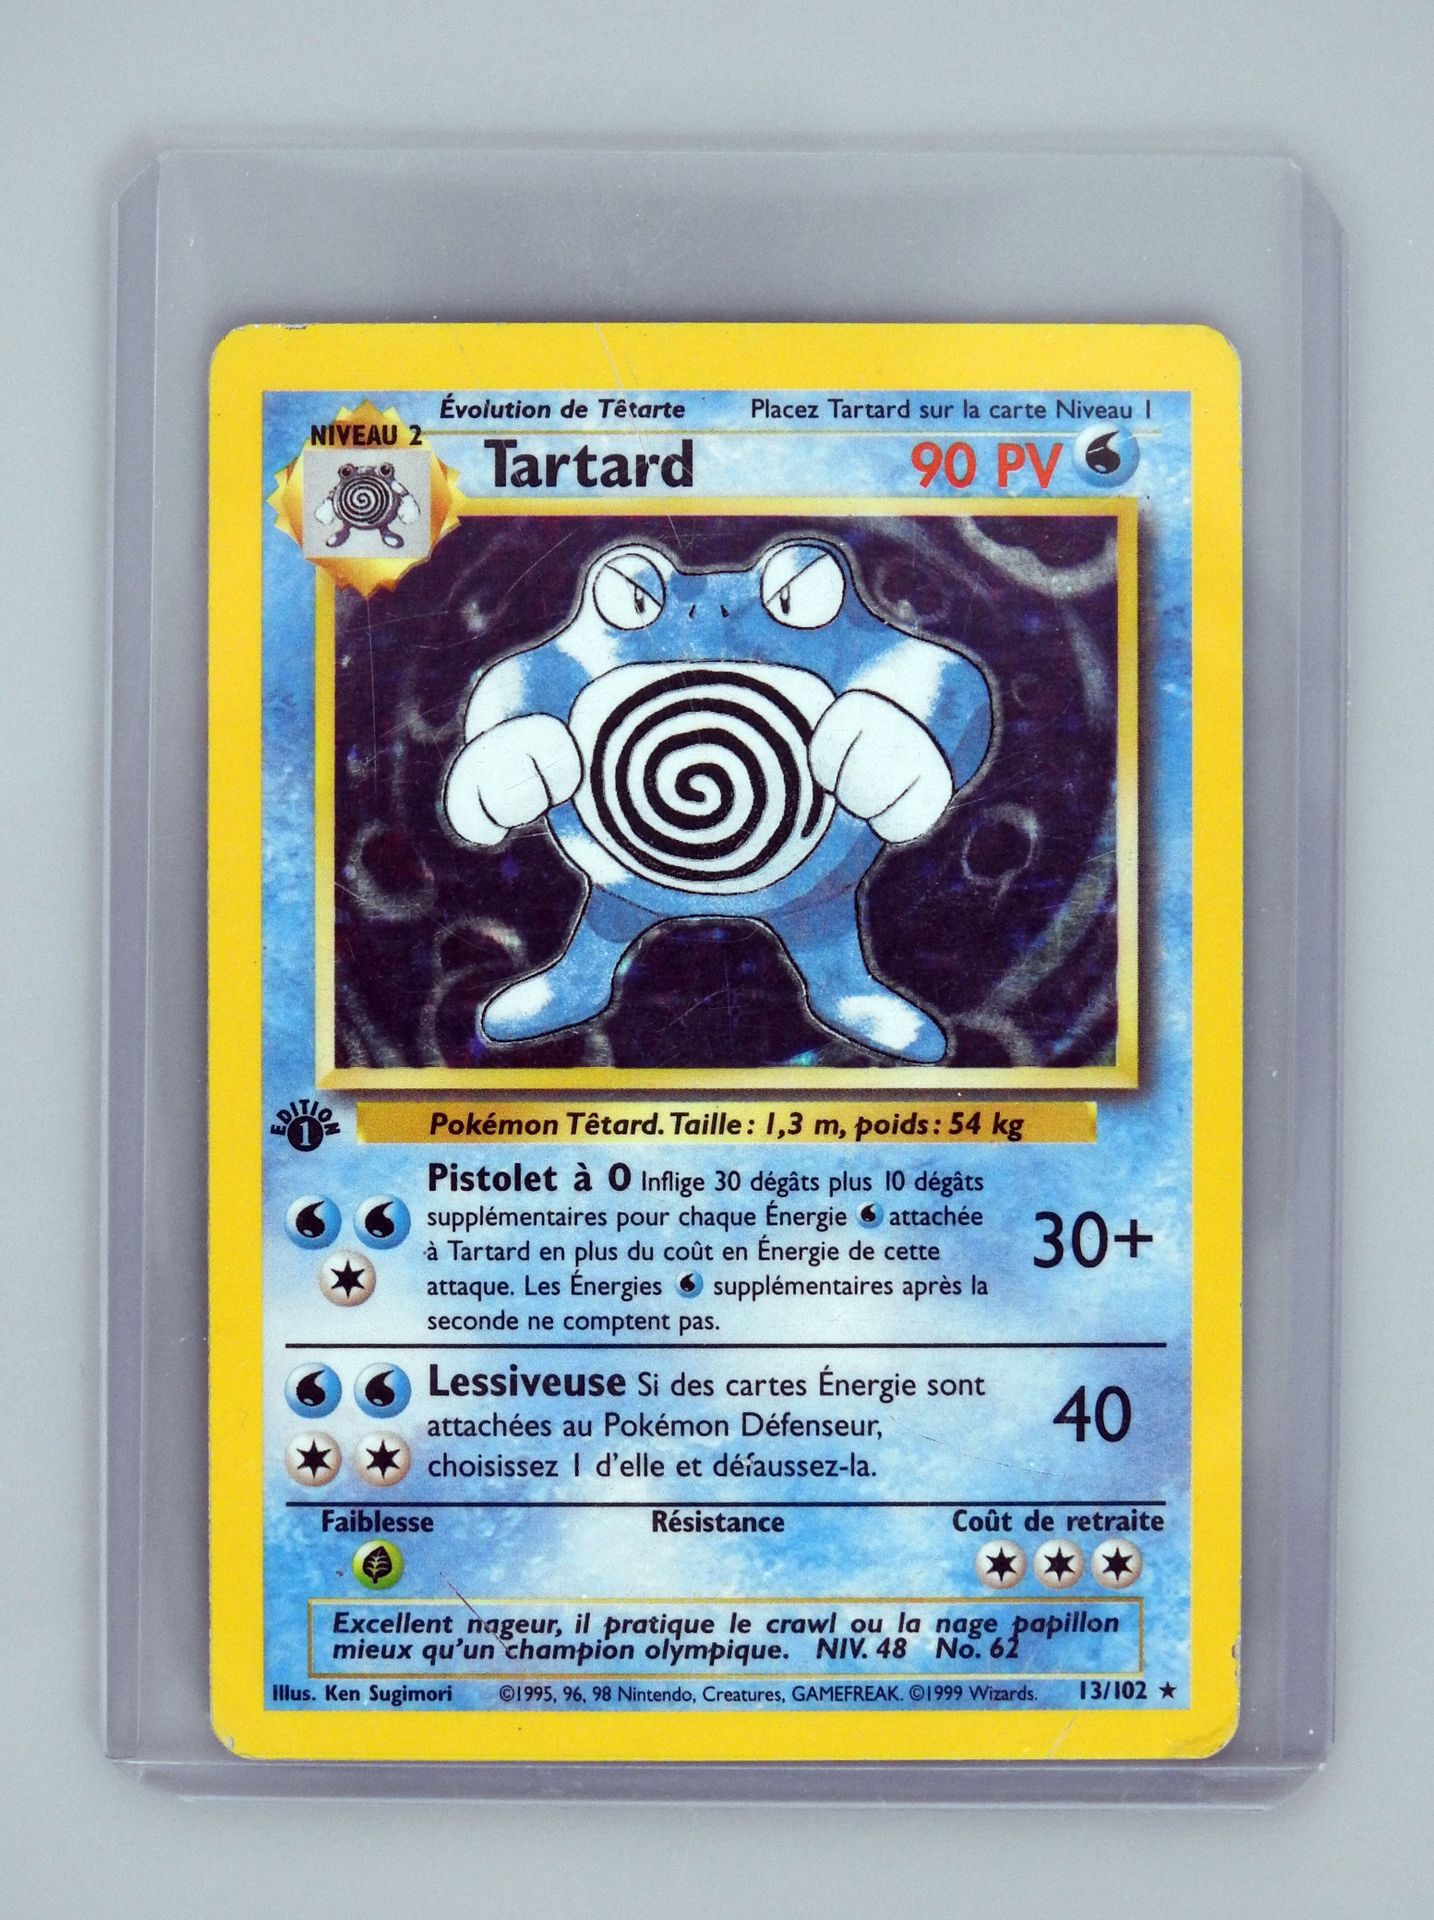 Null TARTARD Ed 1

Wizards Block Basic Set 13/102

Pokémon card with small rubbi&hellip;